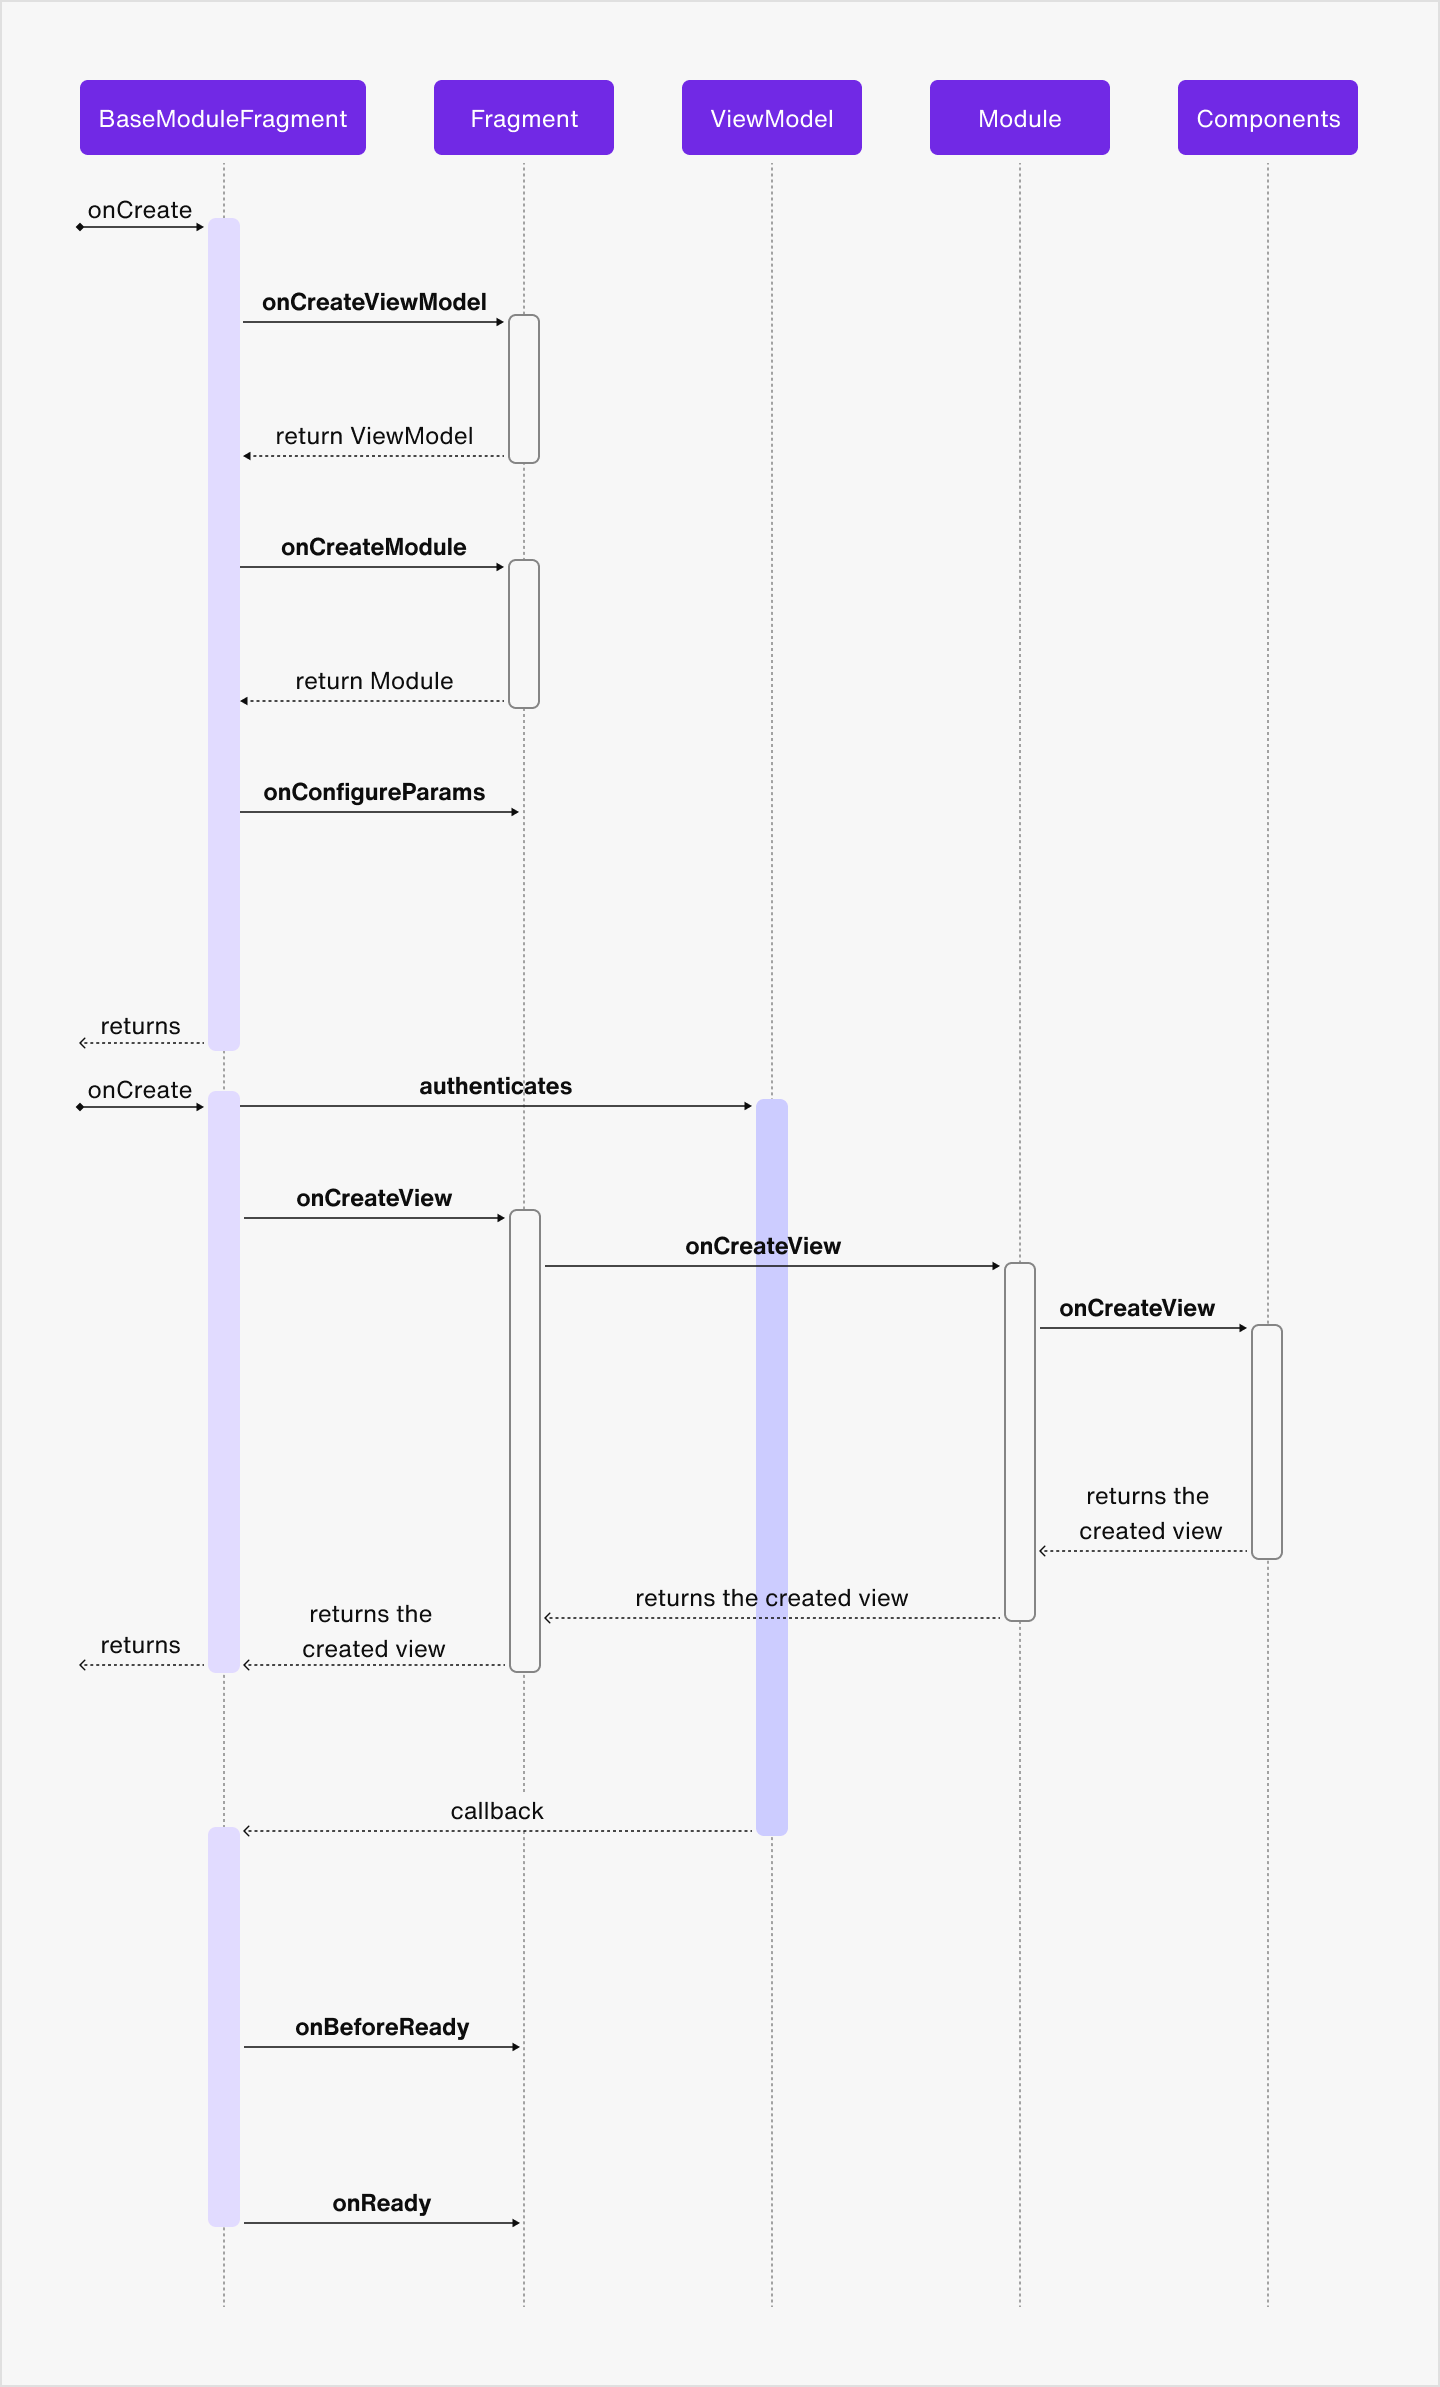 Image|Flow diagram showing the BaseModuleFragment life cycle.